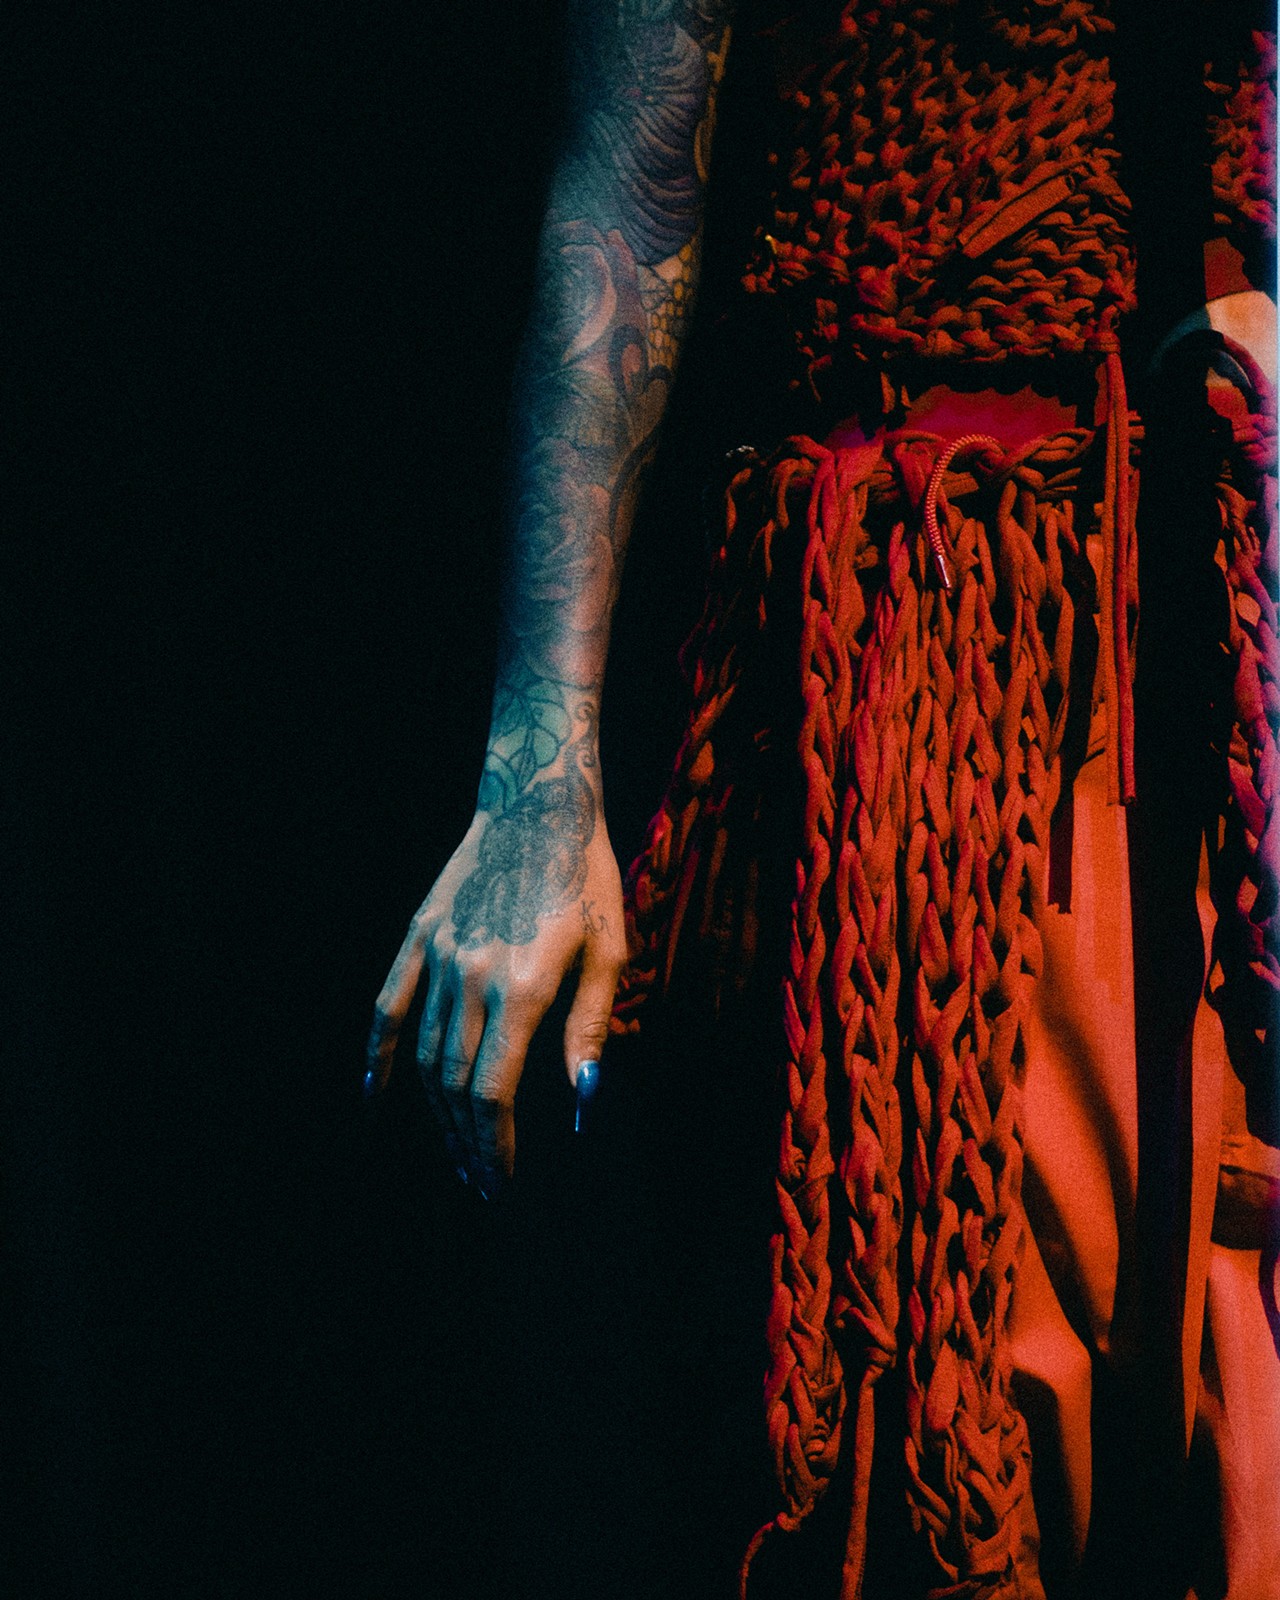 Kehlani at the Andrew J Brady Music Center Aug. 17, 2022